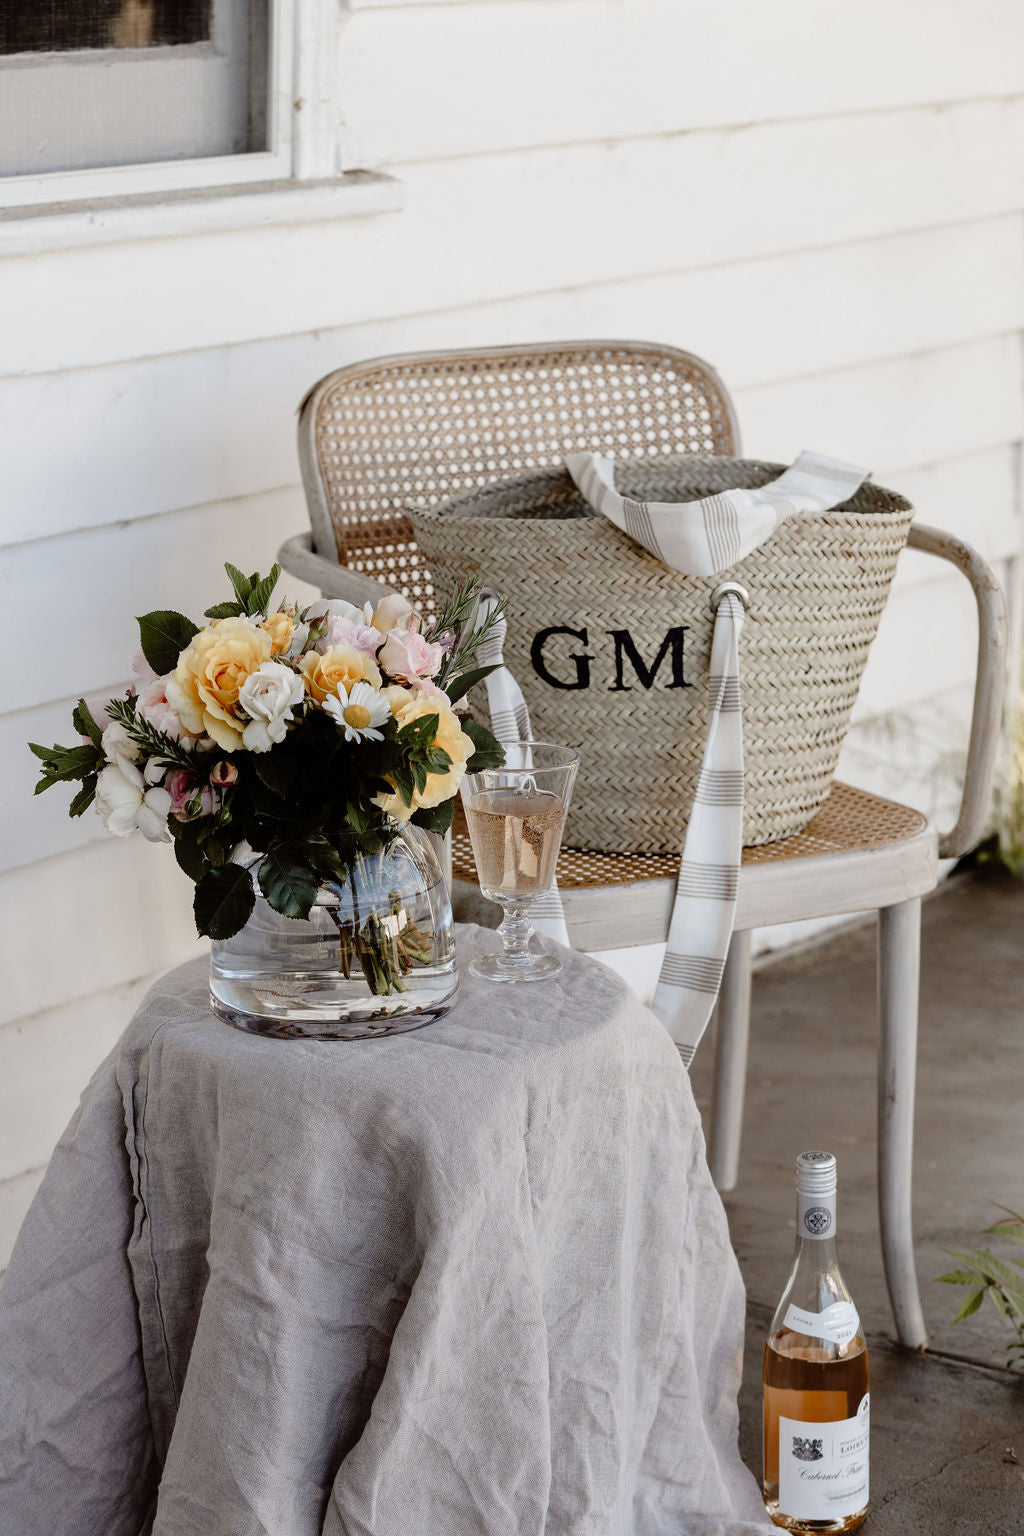 Goodman Market Basket | Black and White Gingham Linen